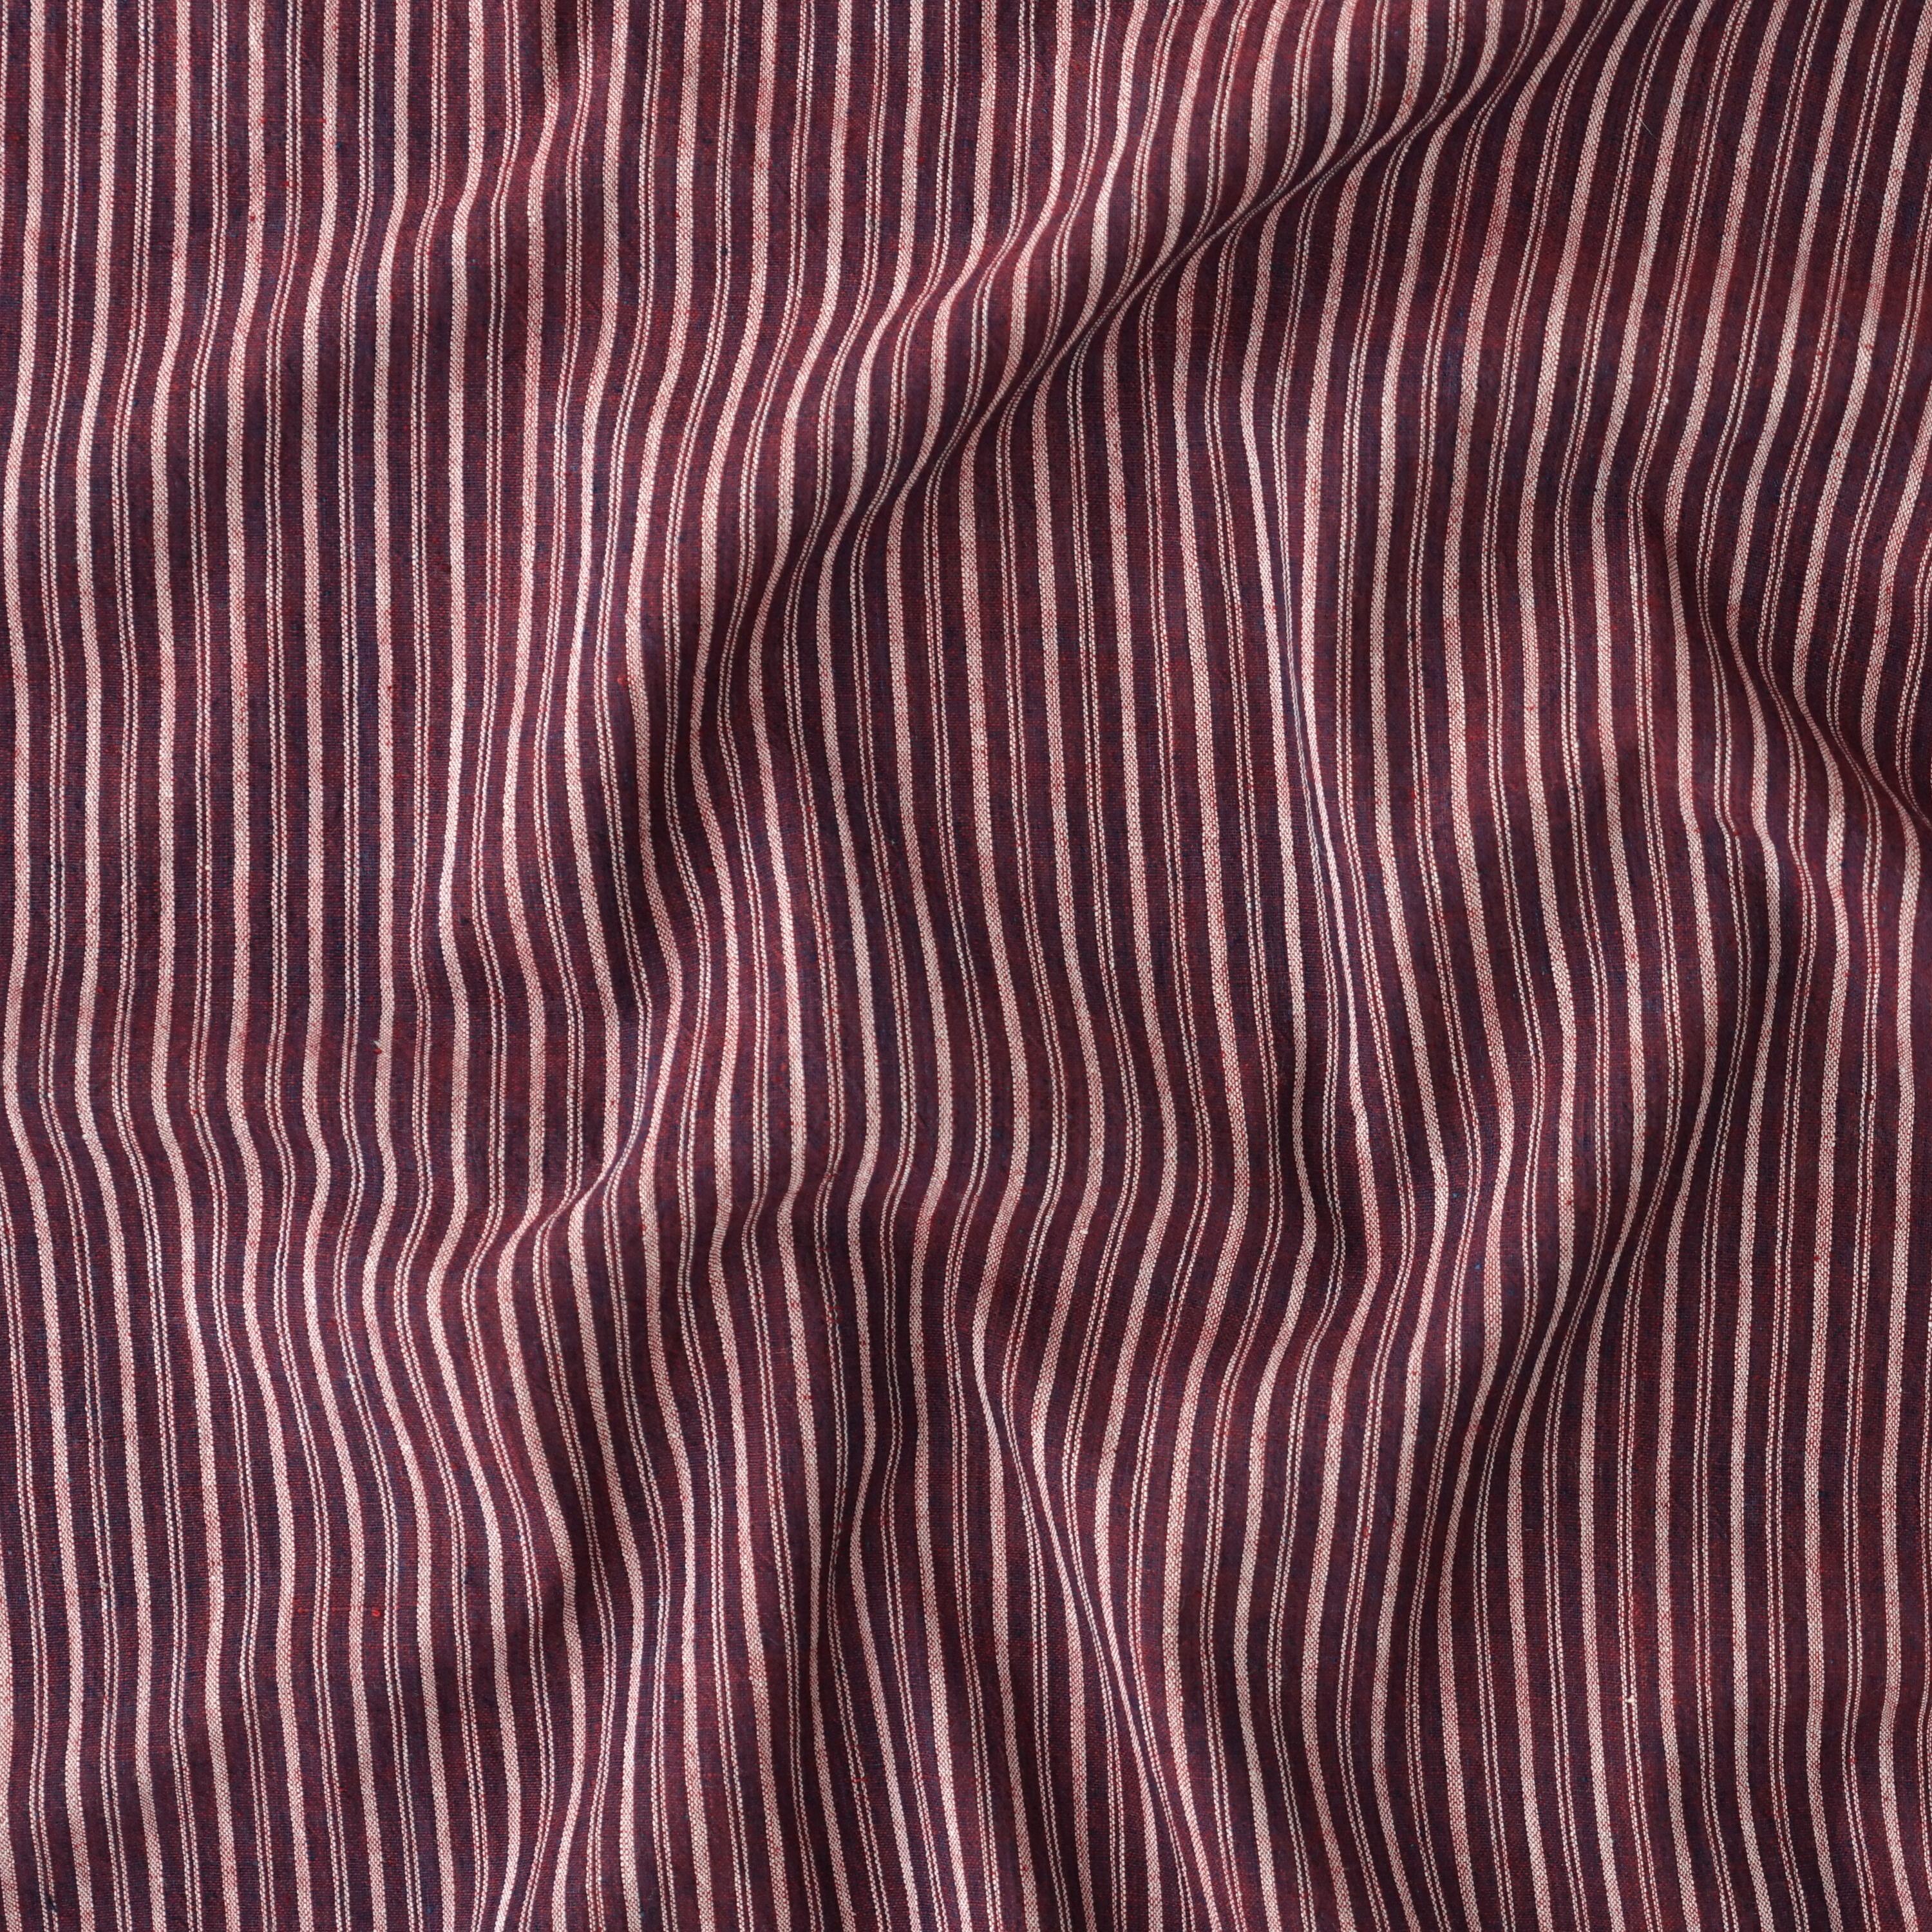 100 % Handloom Woven Cotton - Cross Colour - Pomegranate Yellow Warp, Red Alizarin Weft - Contrast